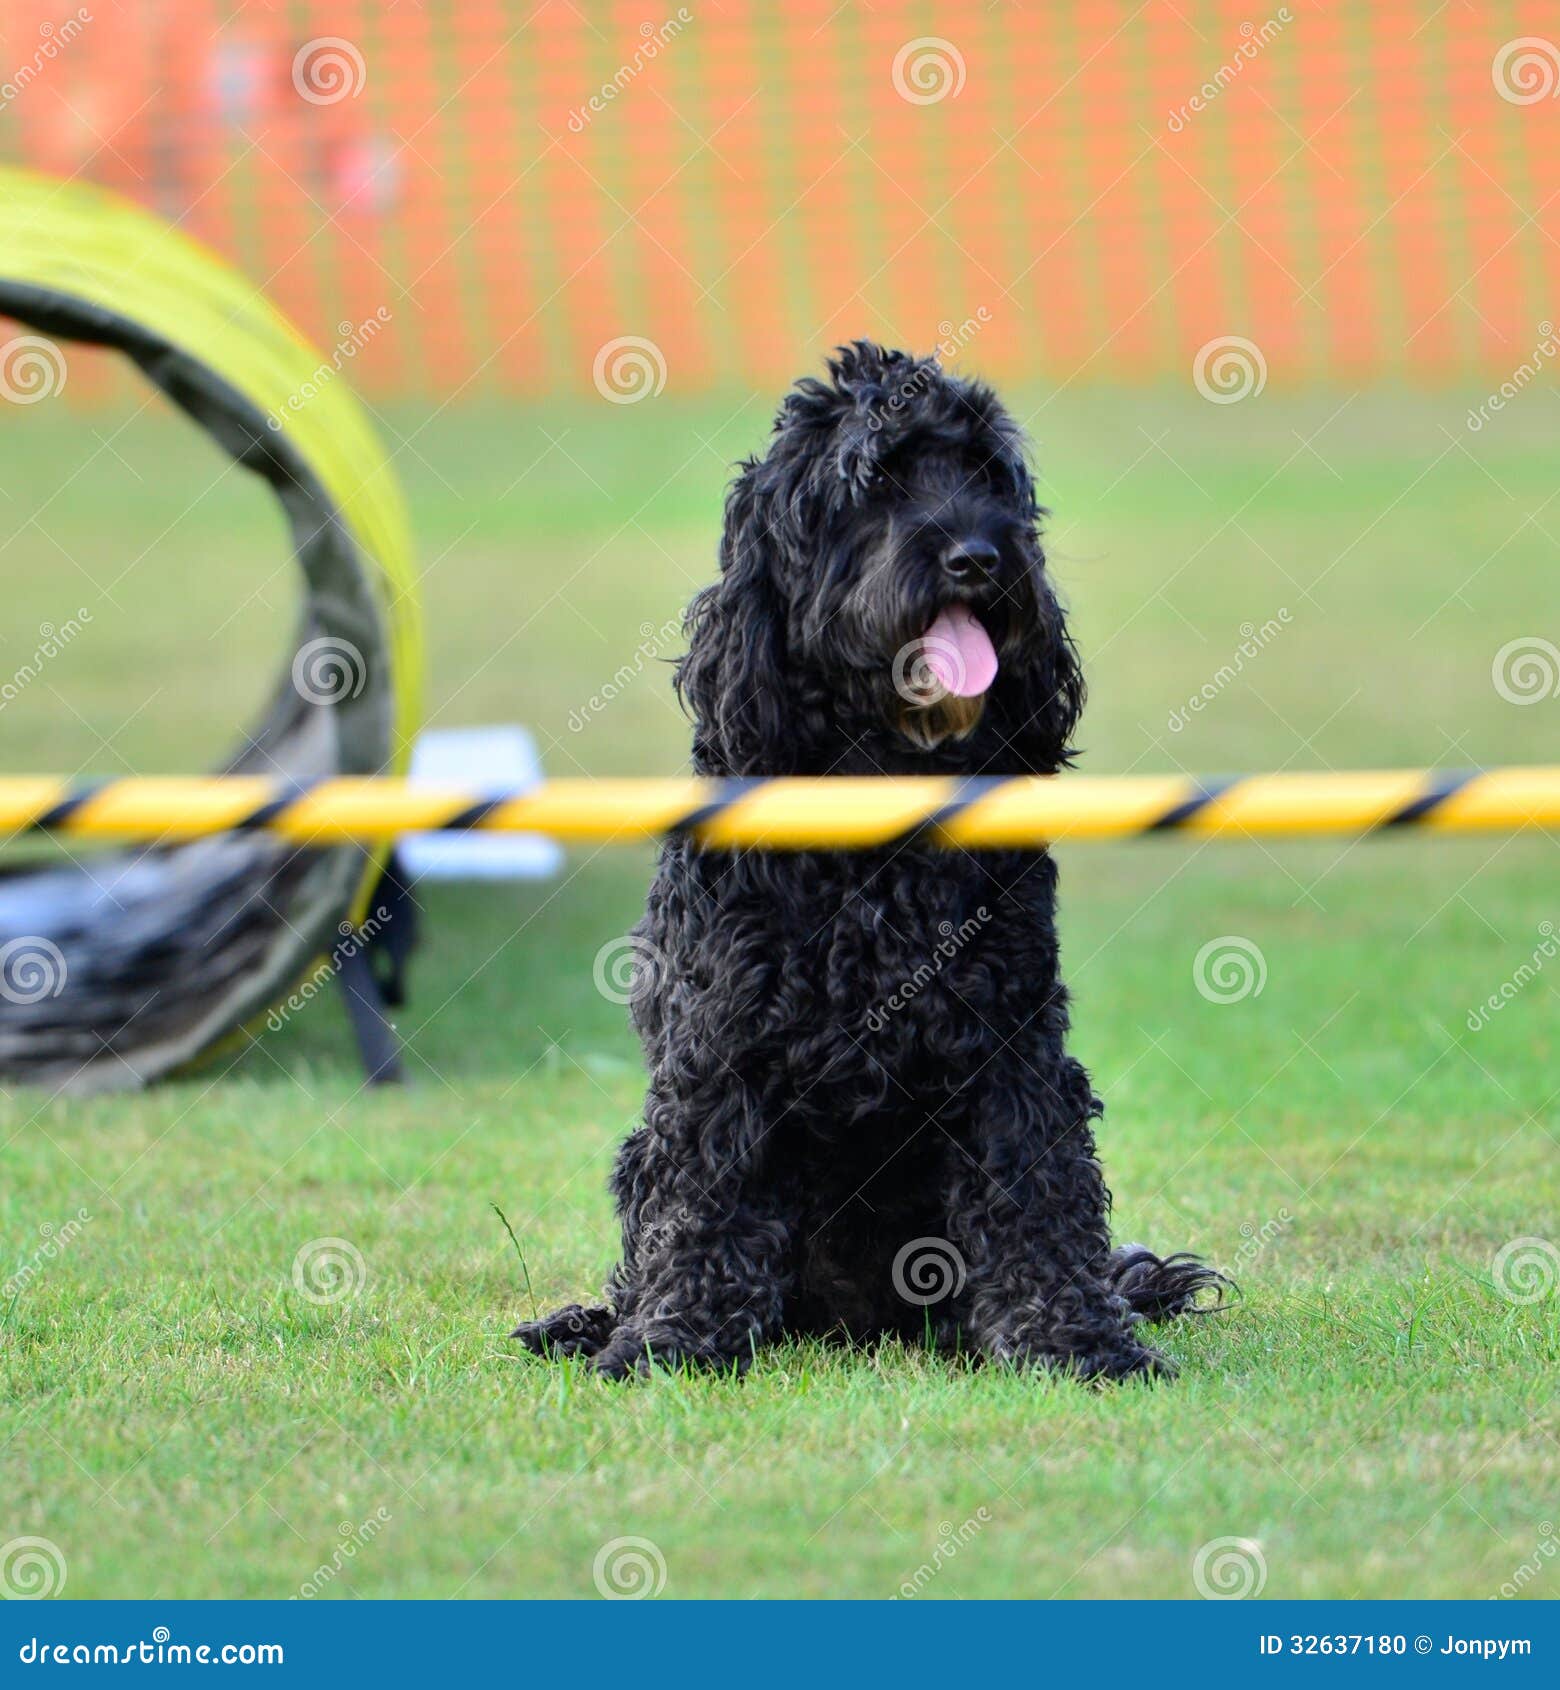 Dog Training For Beginners Stock Photo - Image: 32637180